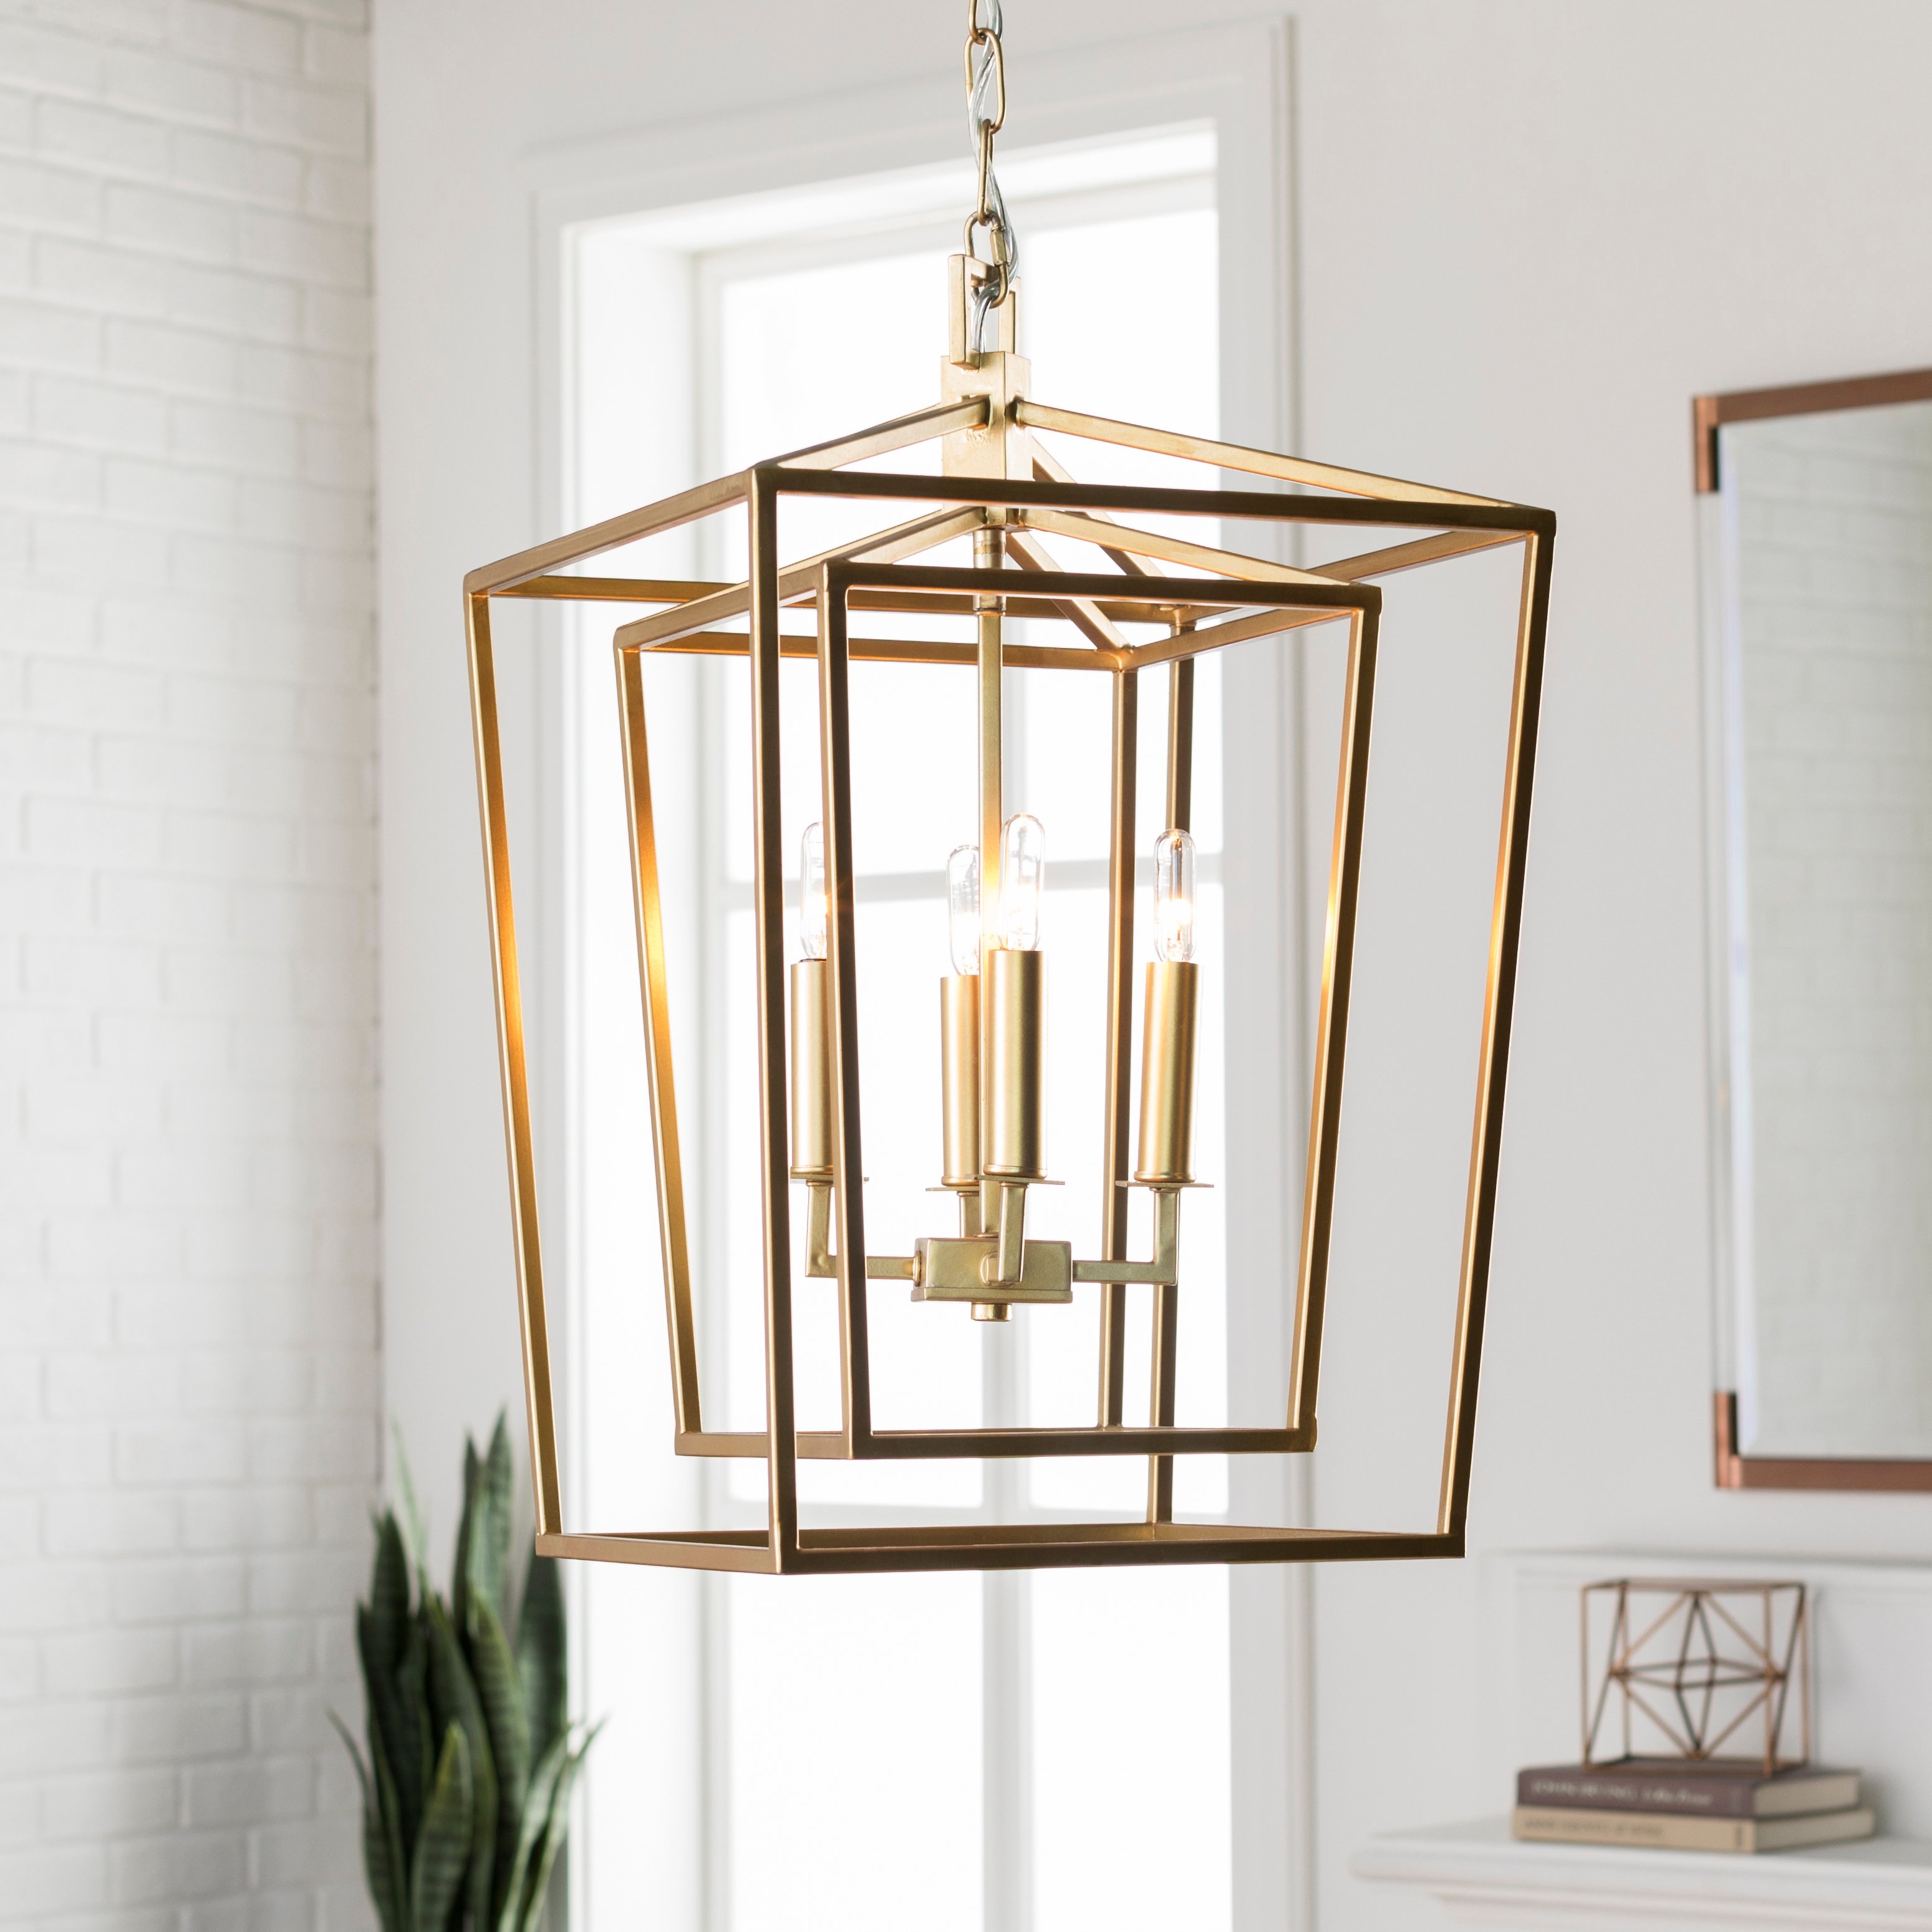 Bellair Lantern Ceiling Light Fixture, Gold - Image 1